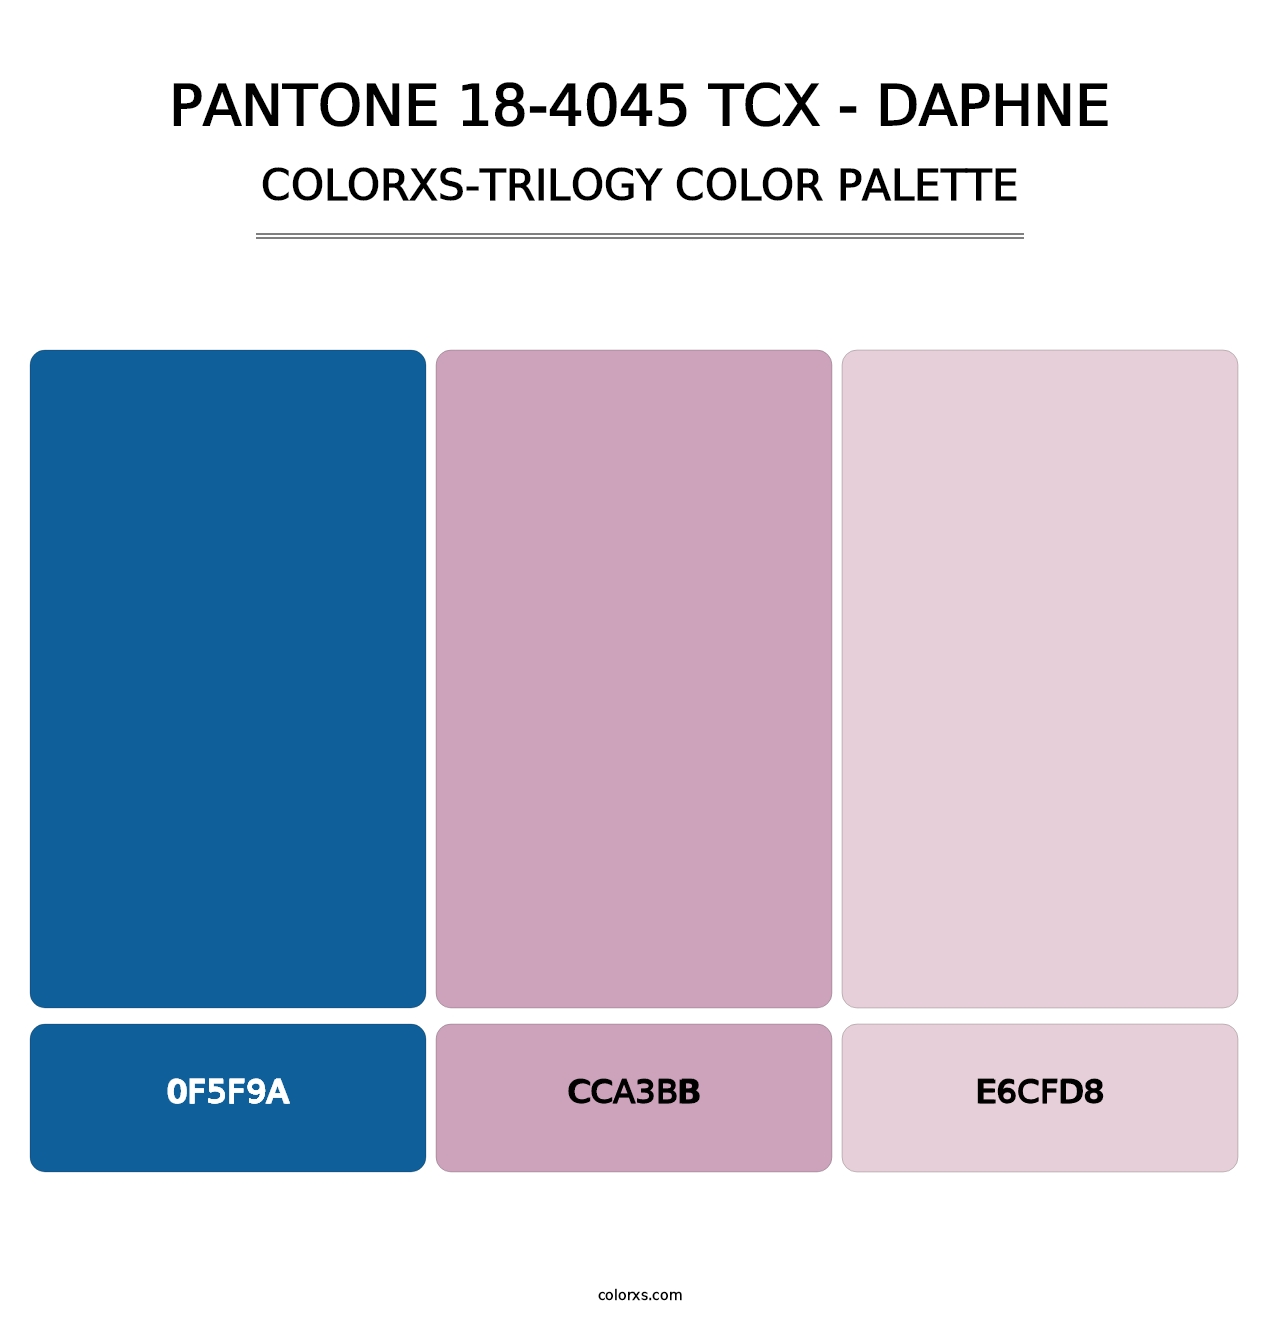 PANTONE 18-4045 TCX - Daphne - Colorxs Trilogy Palette